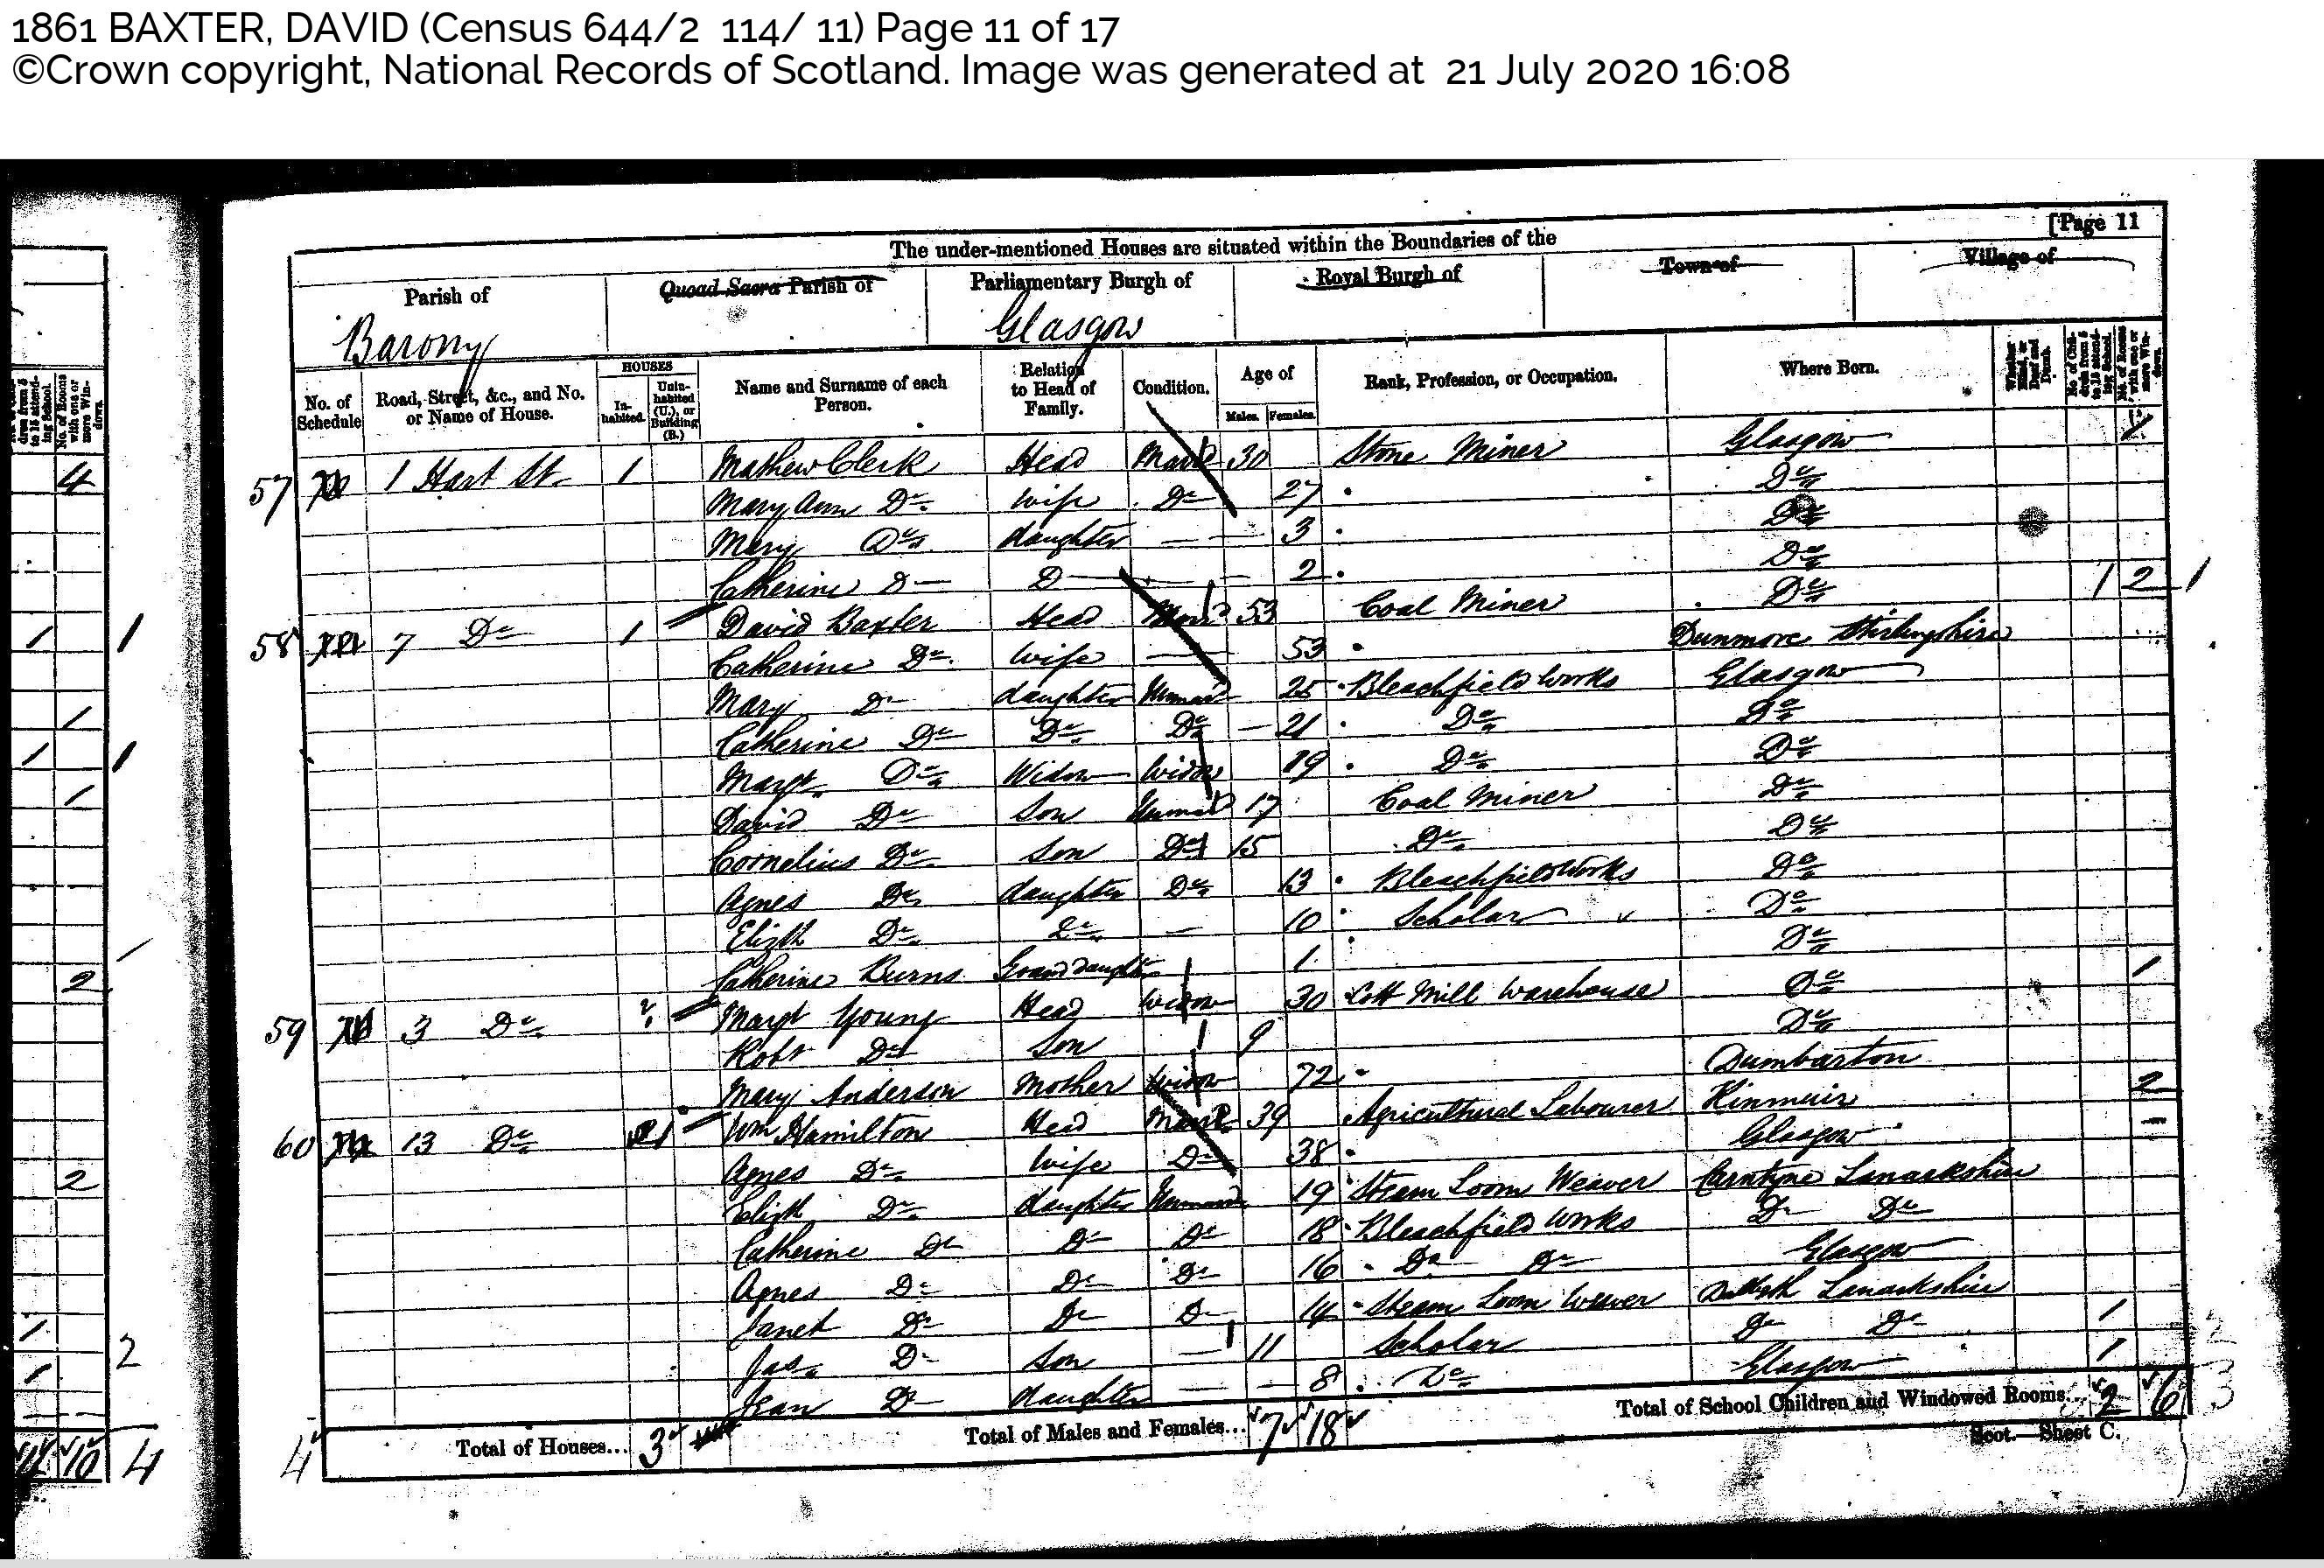 Hotchiss, Catherine + Baxter, David - 1861 Census, 2020-07-21 8:11:37 AM, Linked To: <a href='i11110.html' >Catherine Hotchkiss 🔗</a>